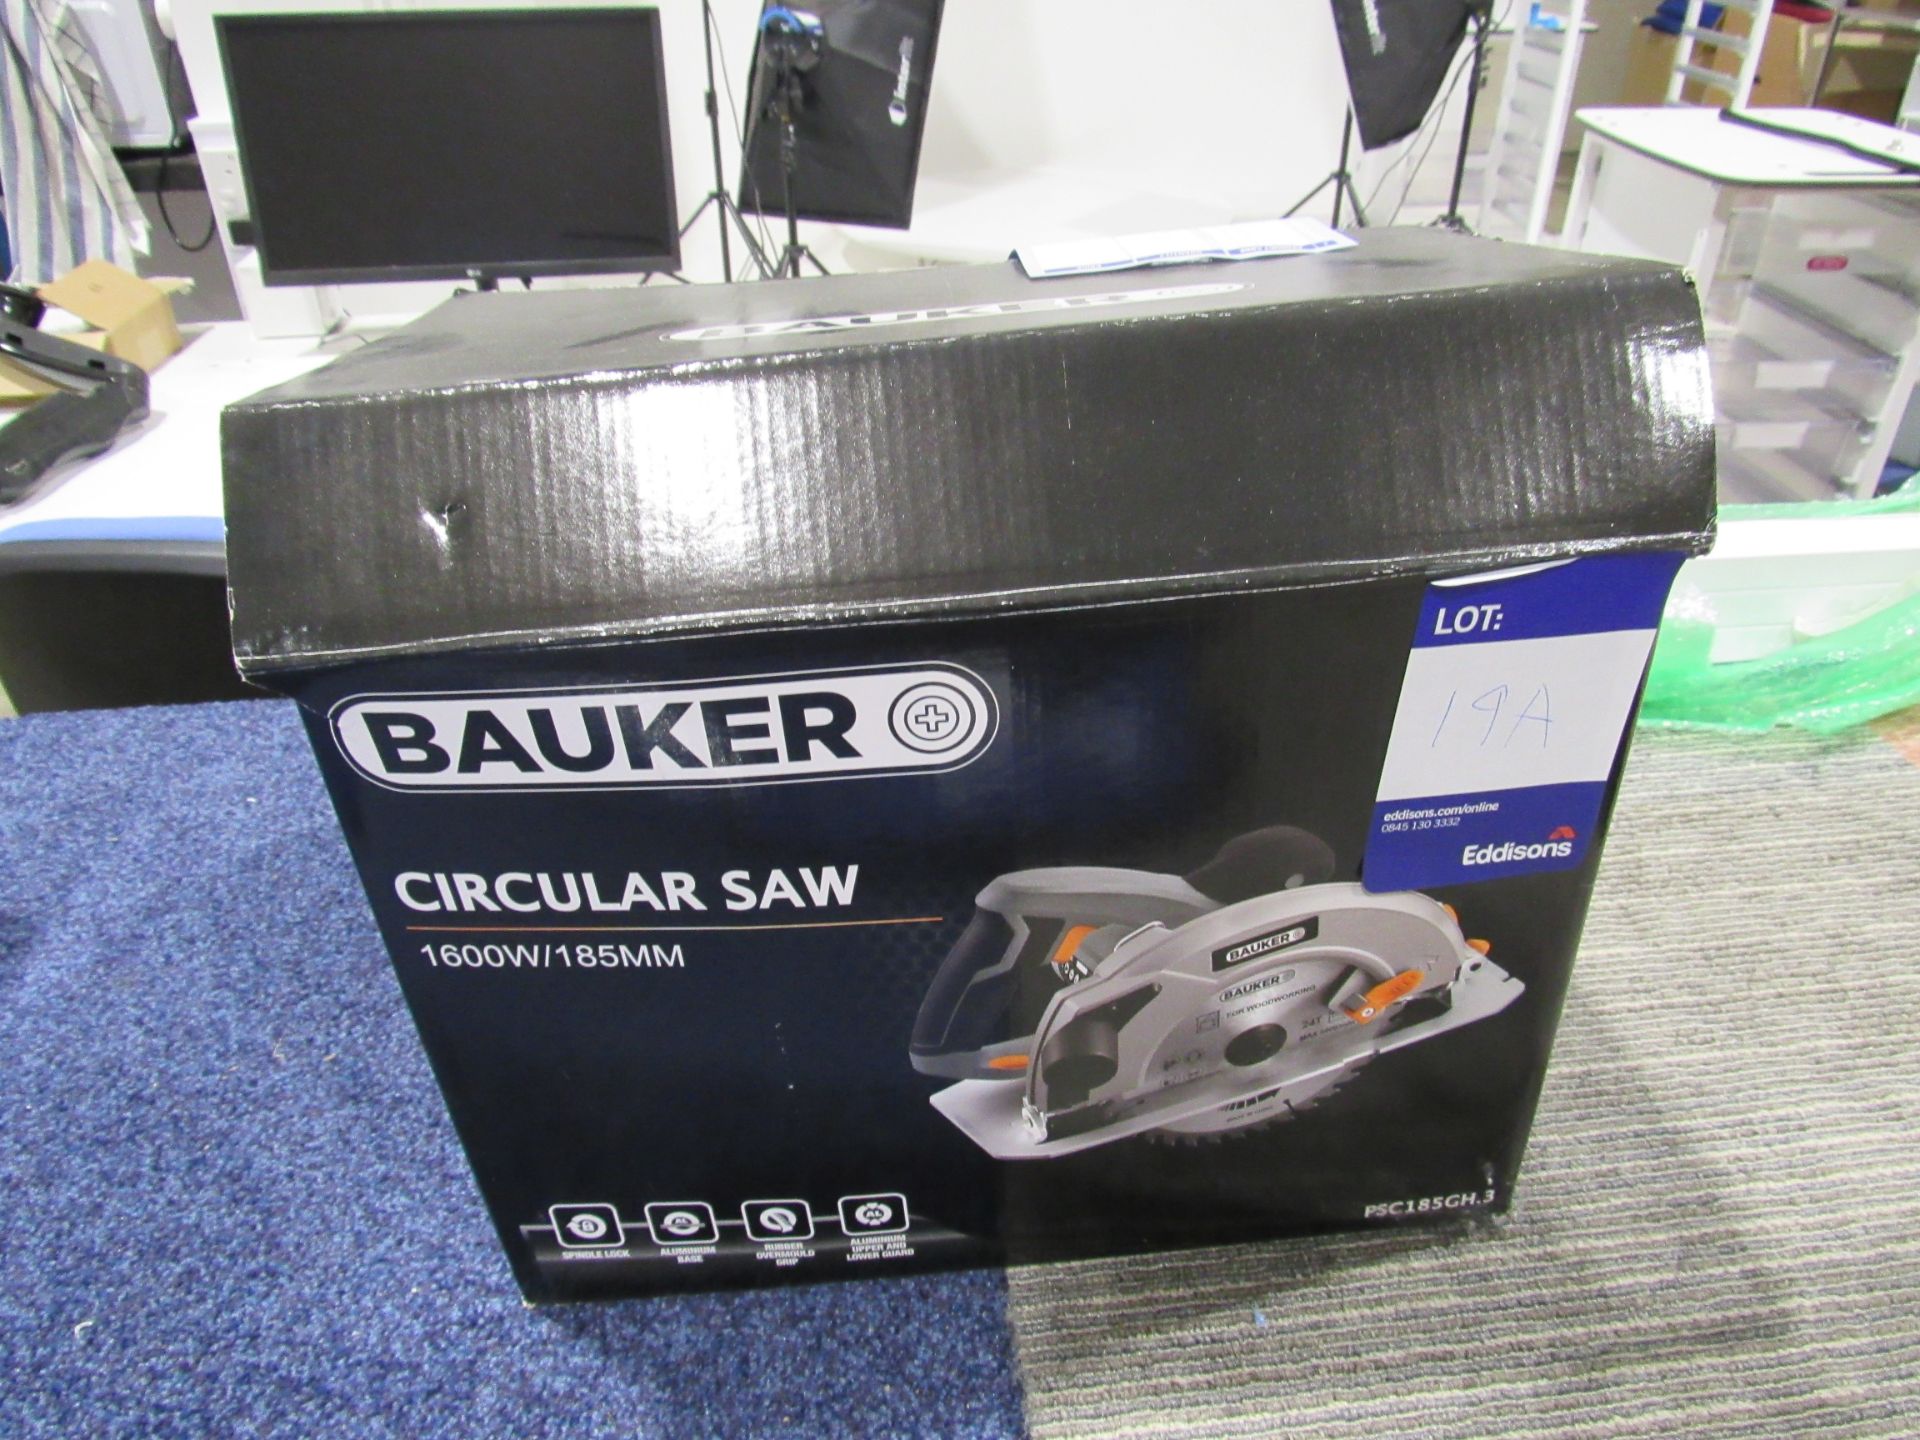 Bauker Circular Saw PSC185 GH3, 1600w, 185mm - Image 4 of 4